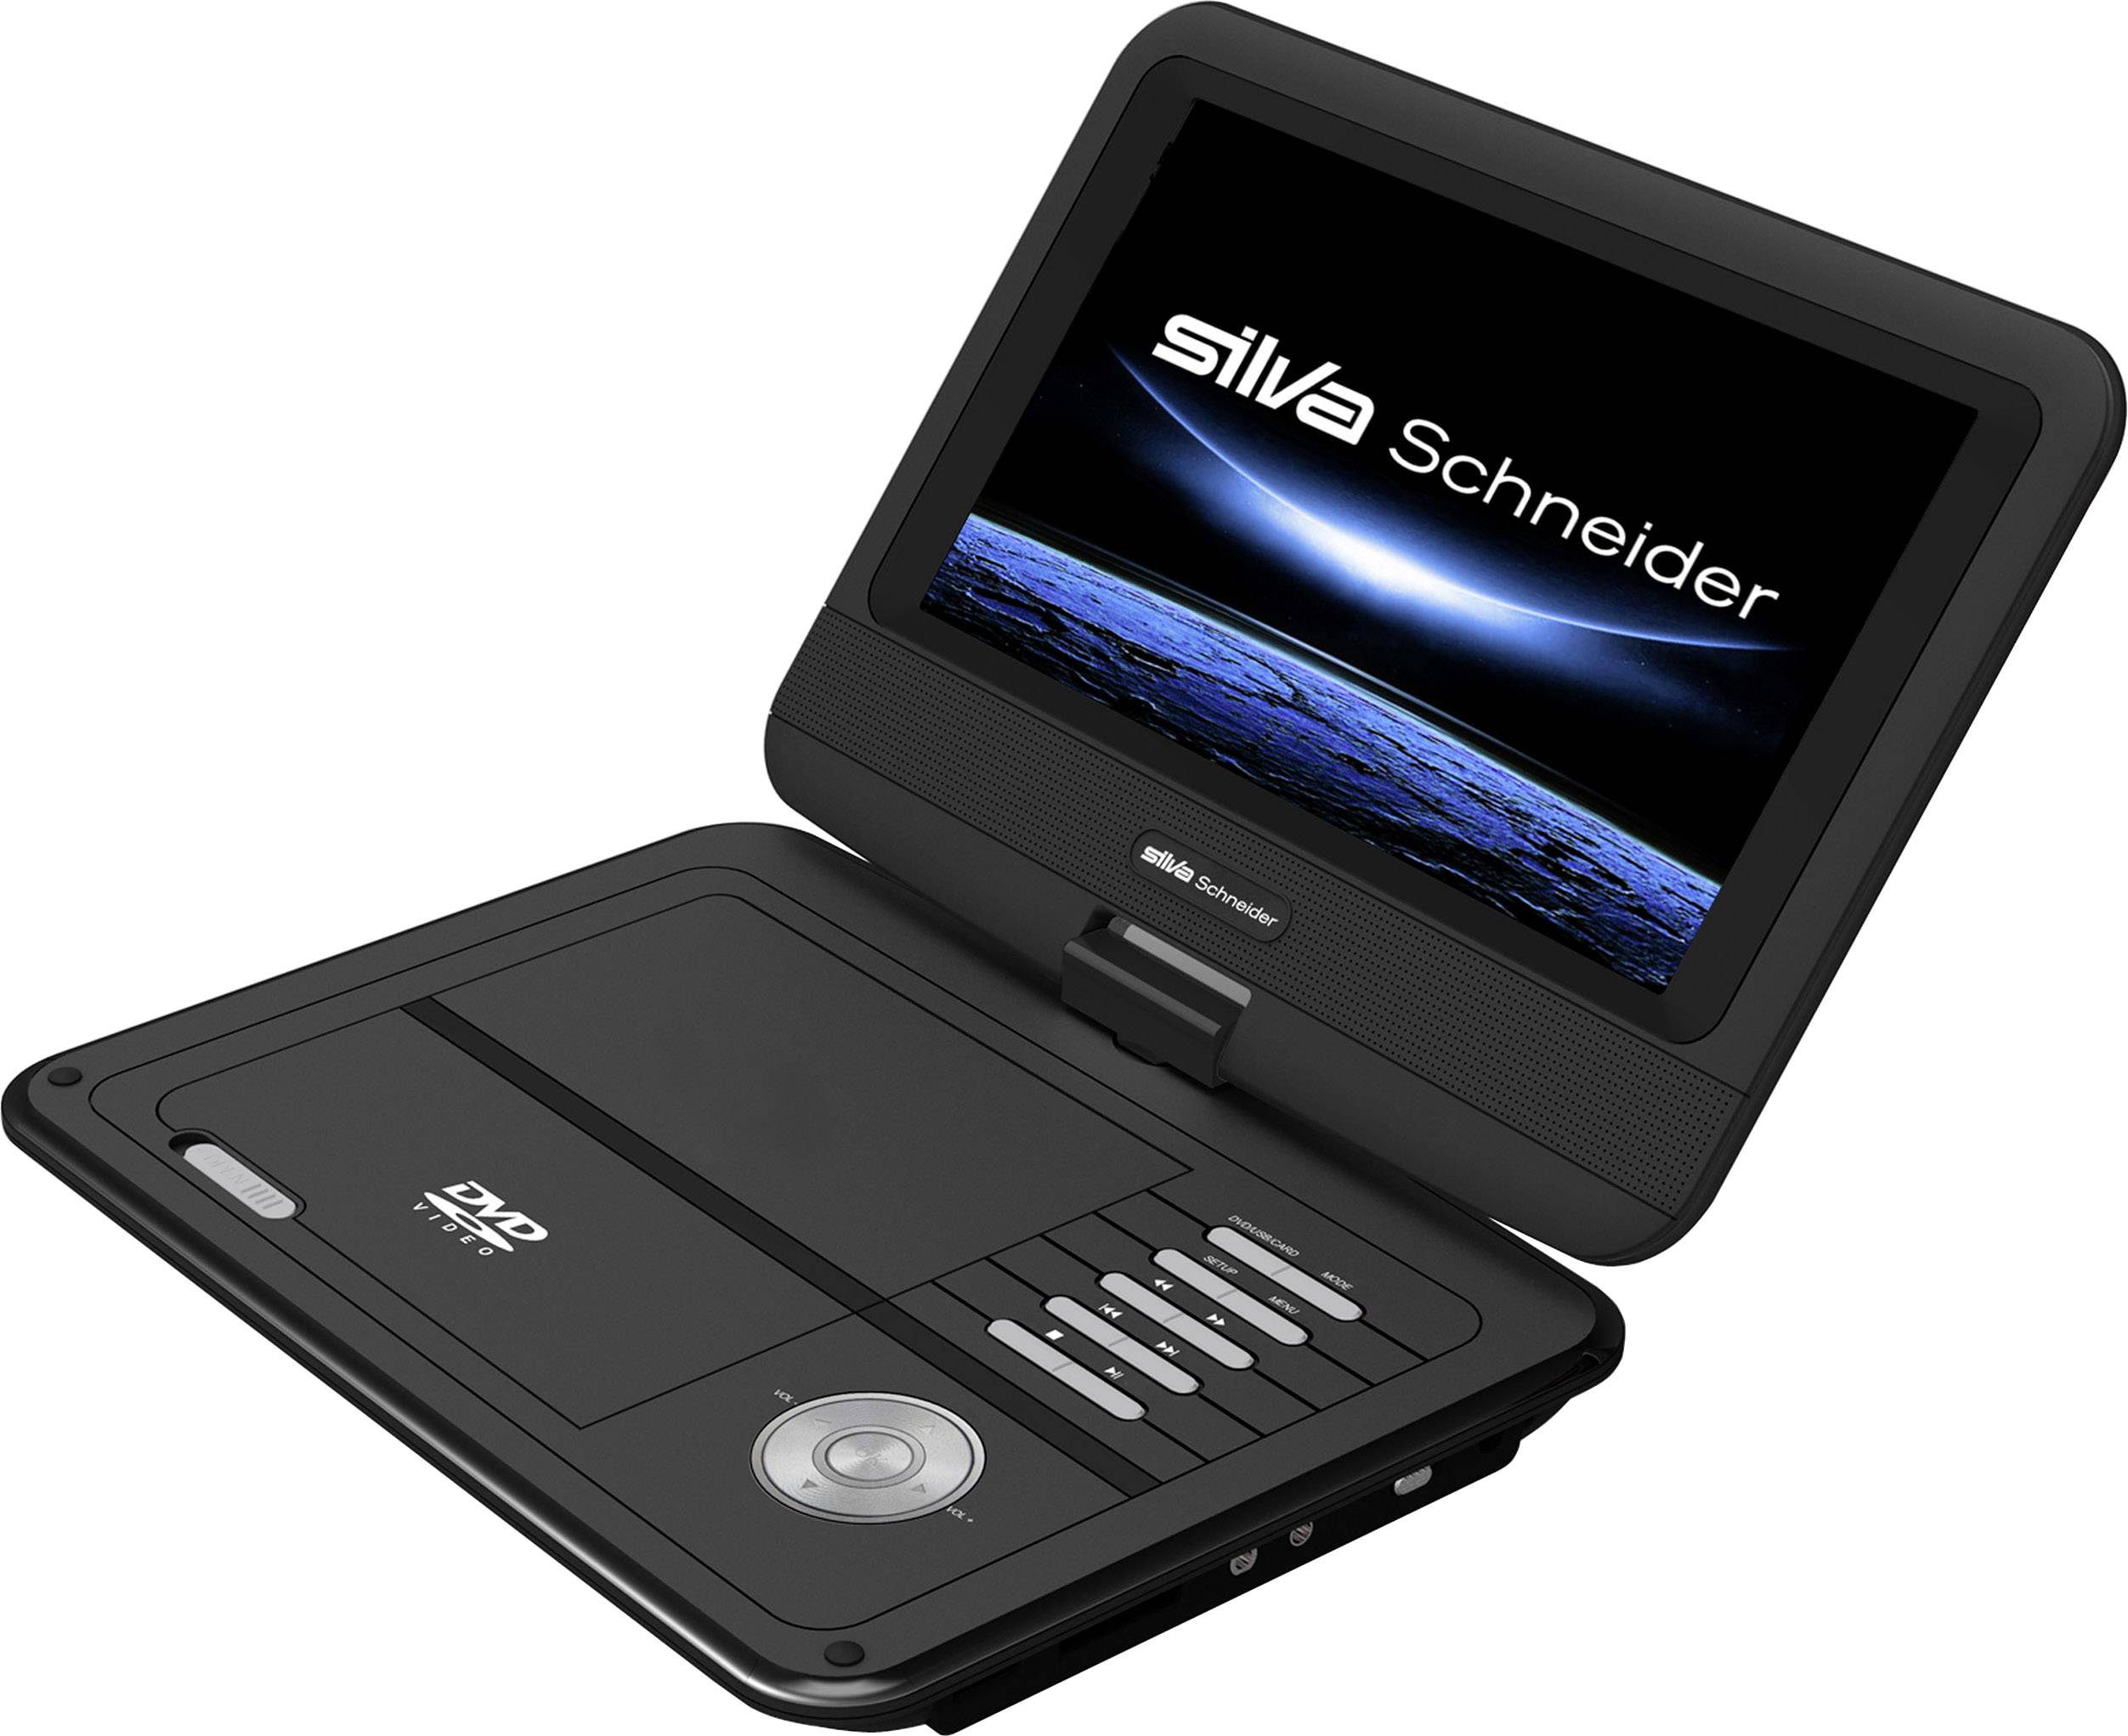 Silva Schneider Dvd 926 Usb Portable Dvd Player 23 Cm 9 Inch Incl